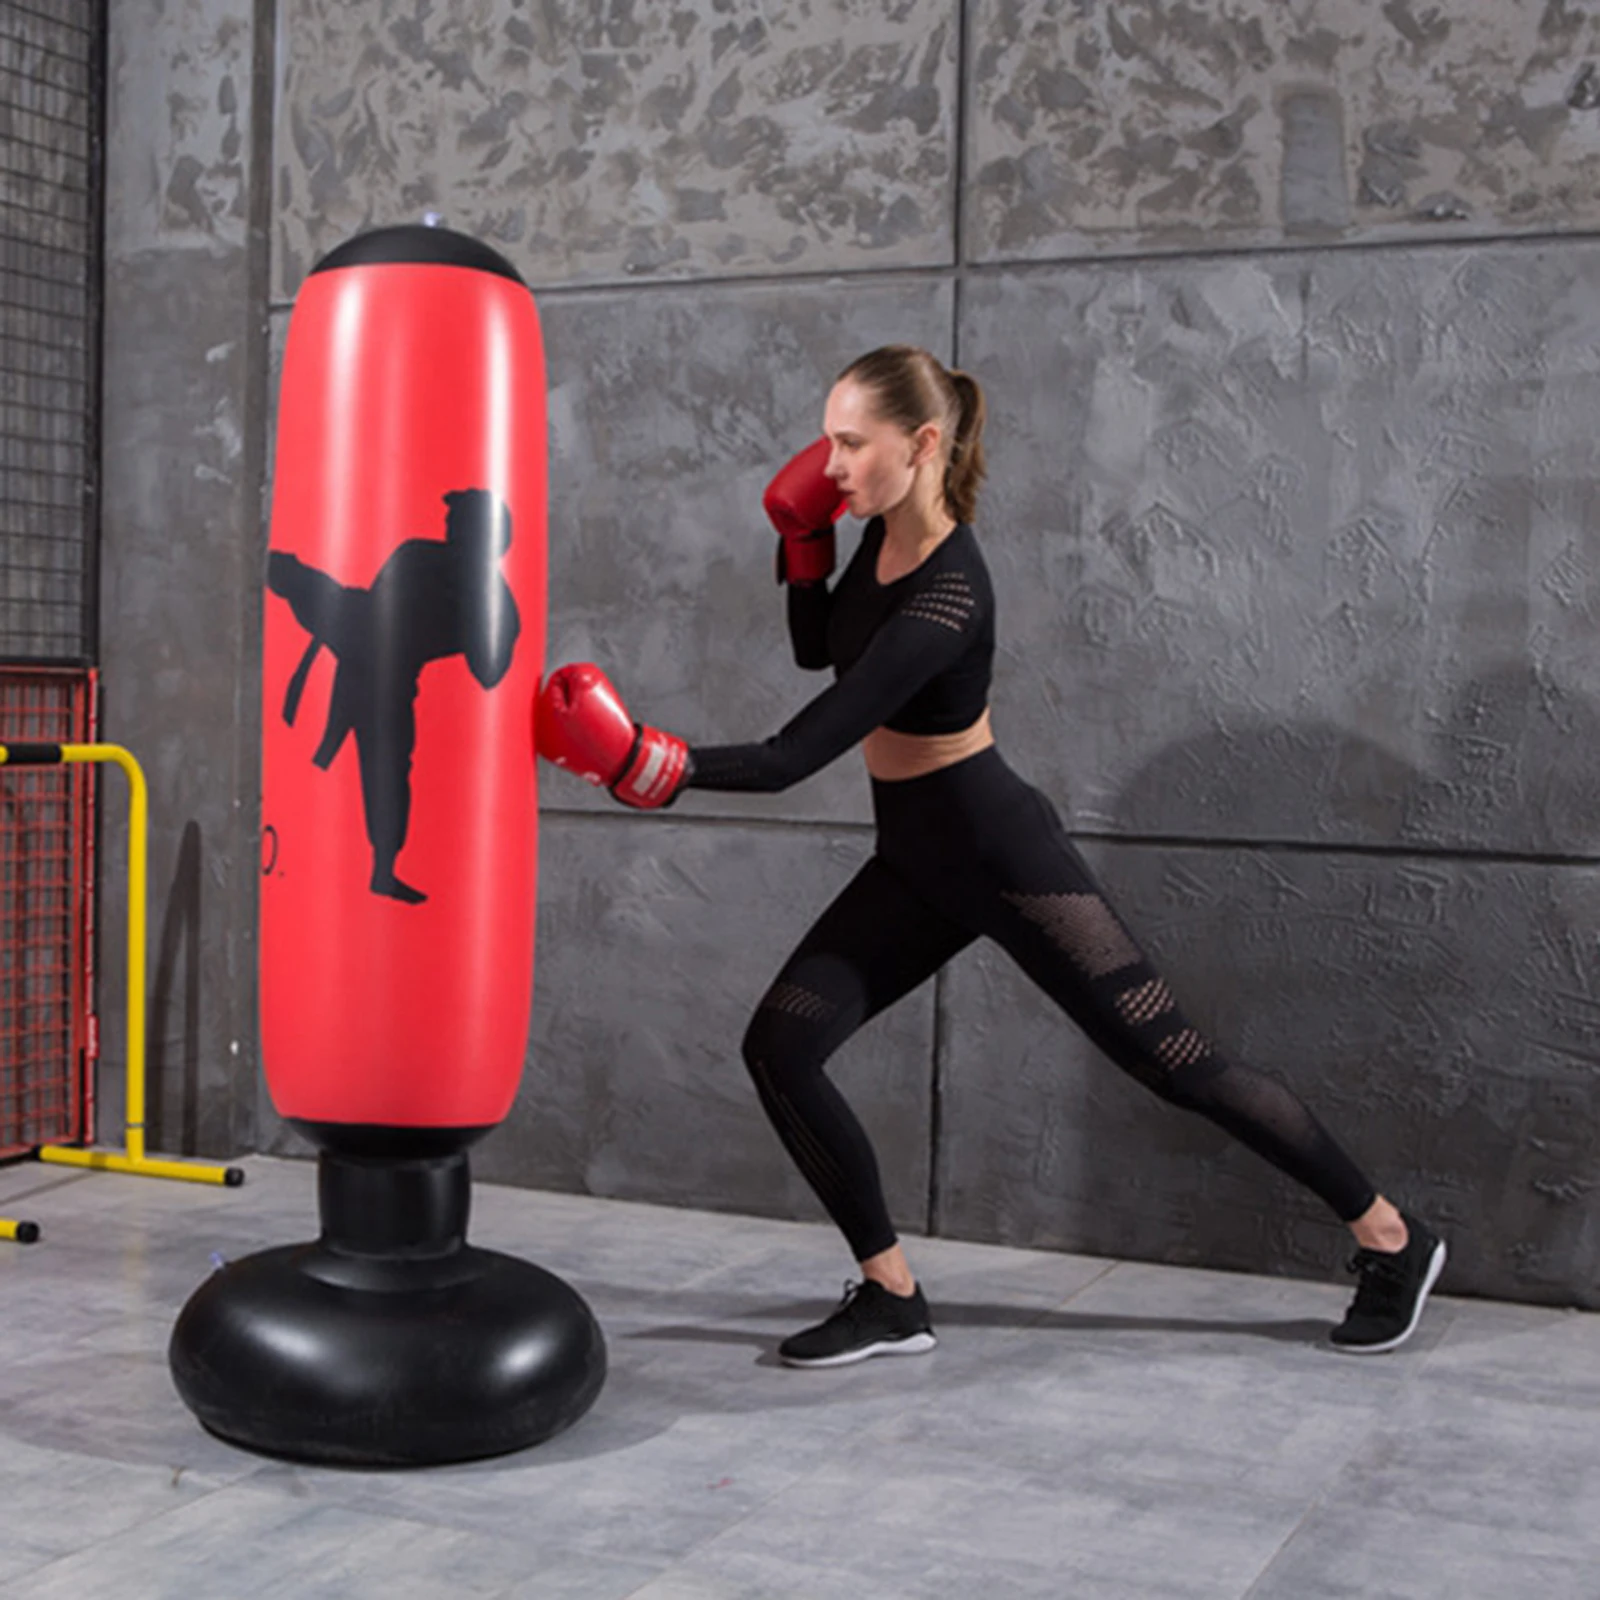 Keyohome Inflatable Punching Bag Free Standing Boxing Punch Bag,160cm/5.25ft Durable Fitness Sandbag for Adult Kids 